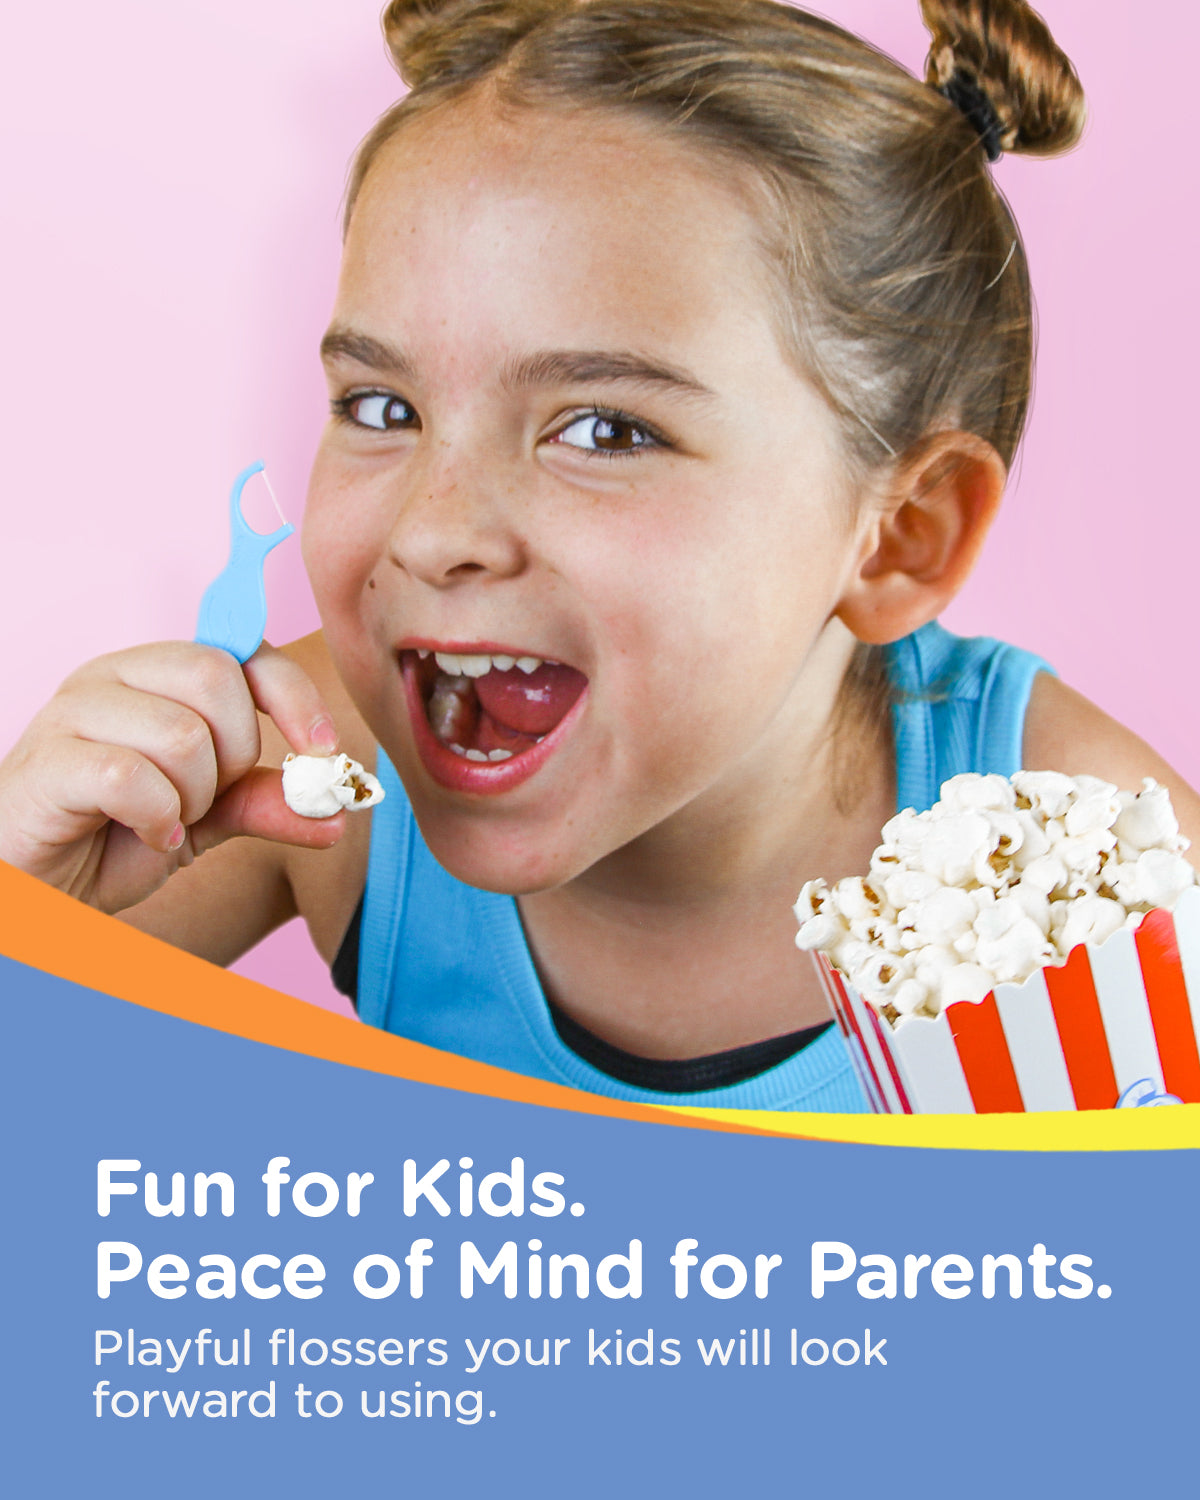 Piico Dental Floss Picks for Kids - (300 Count Playground Zoo + Freebies)